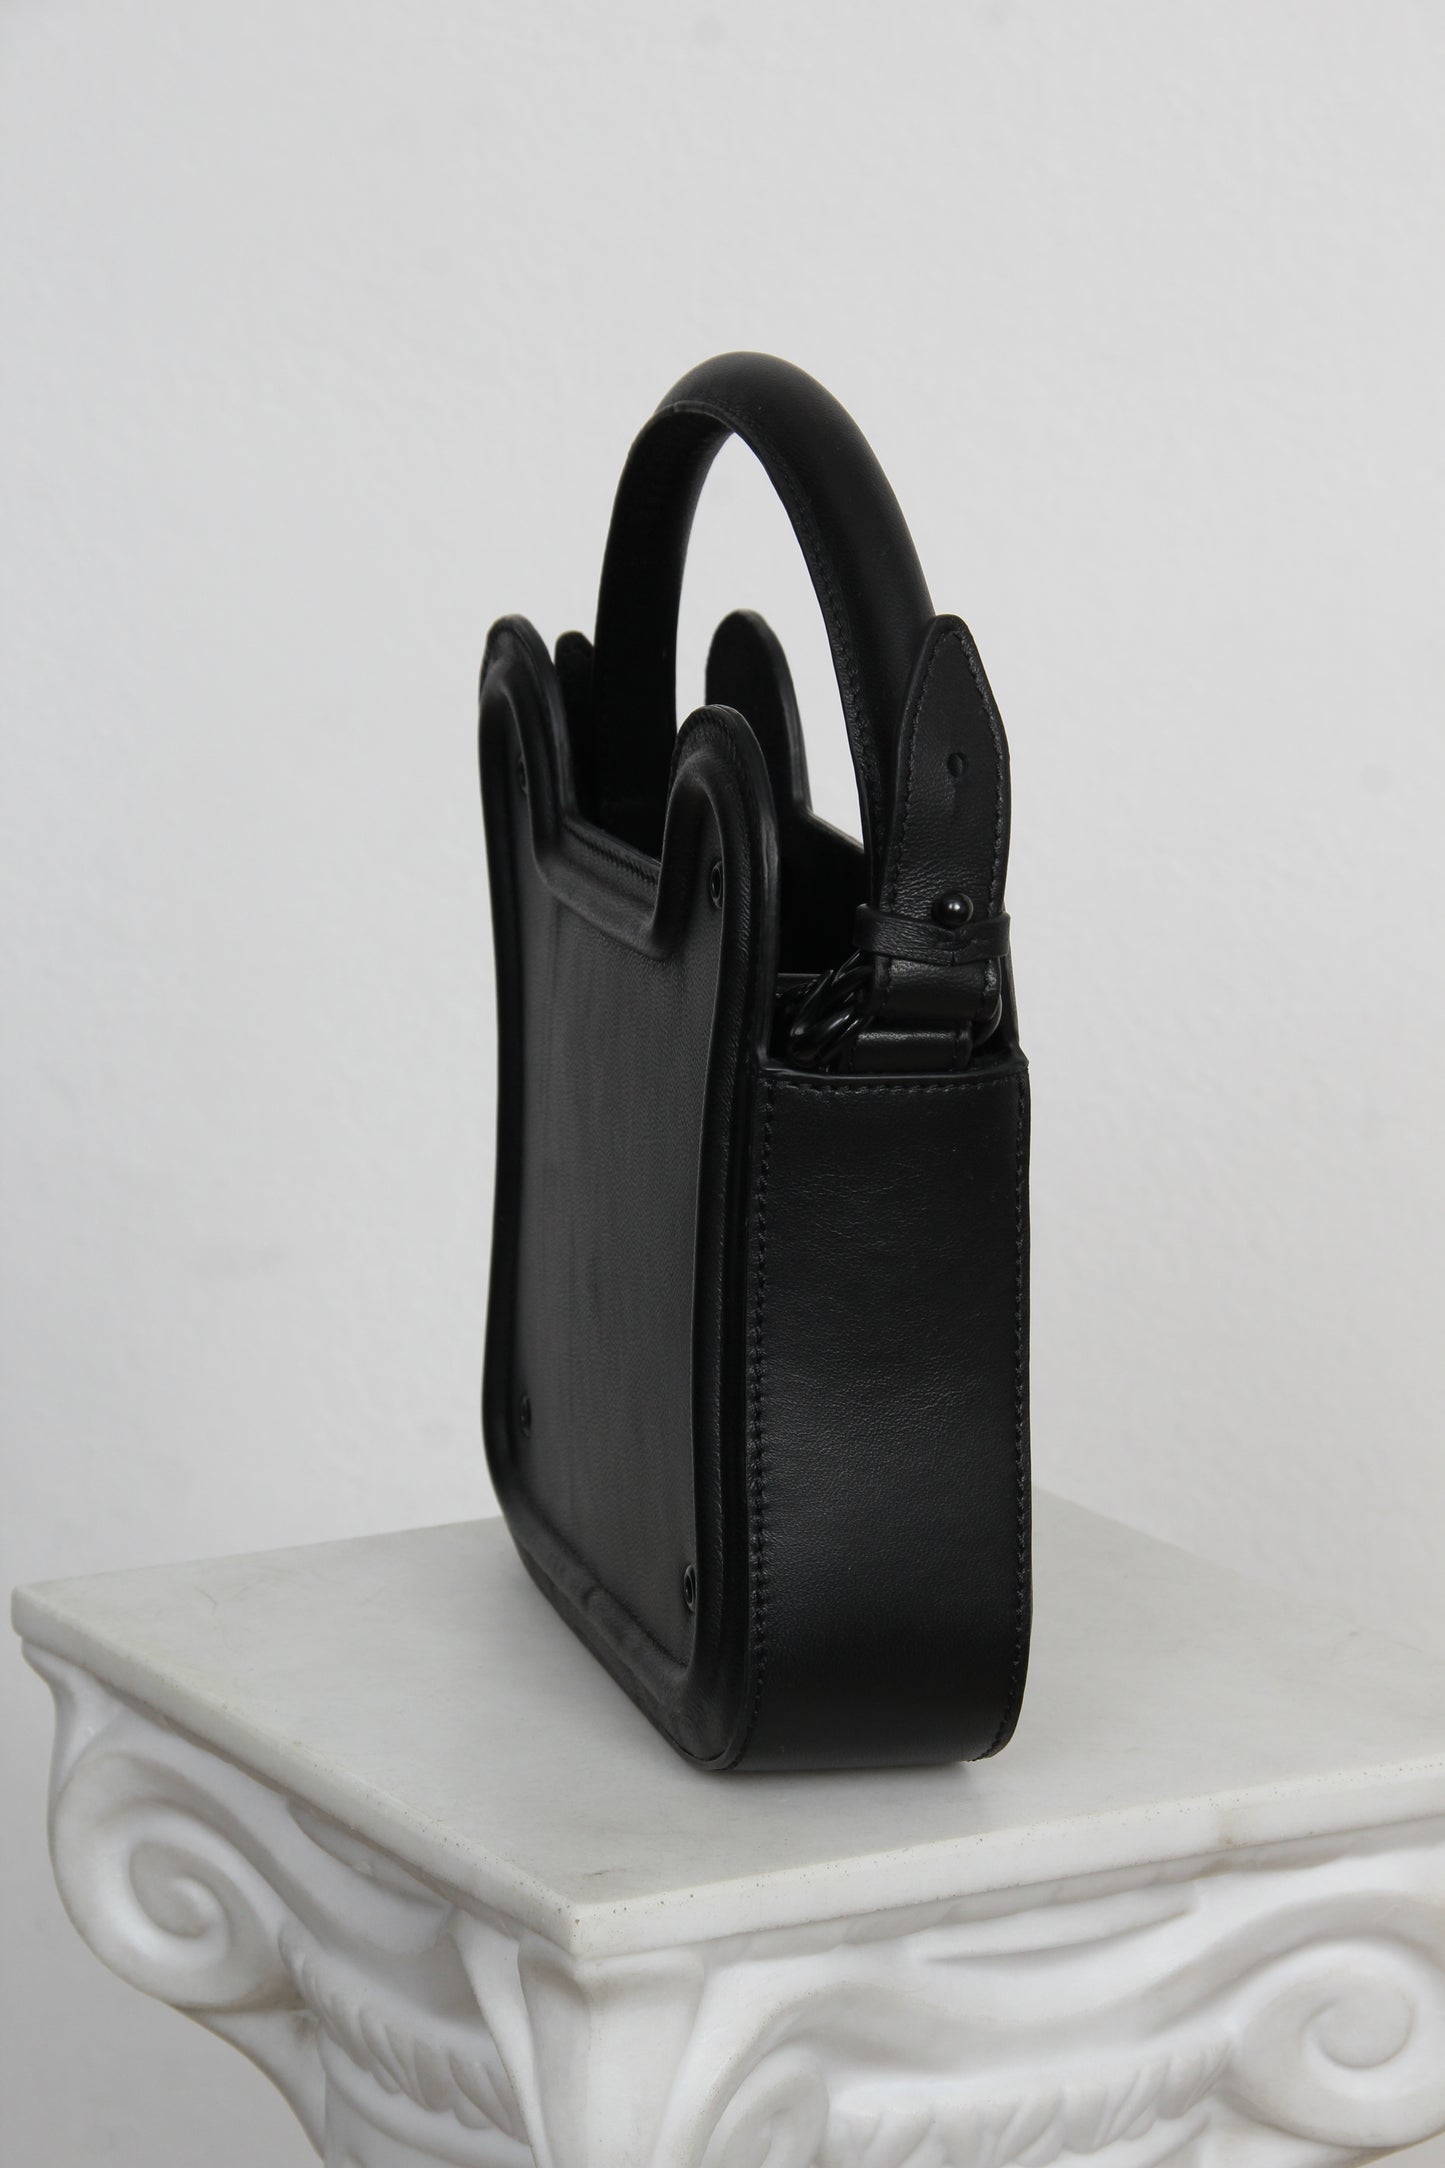 The Lucchetto Bag